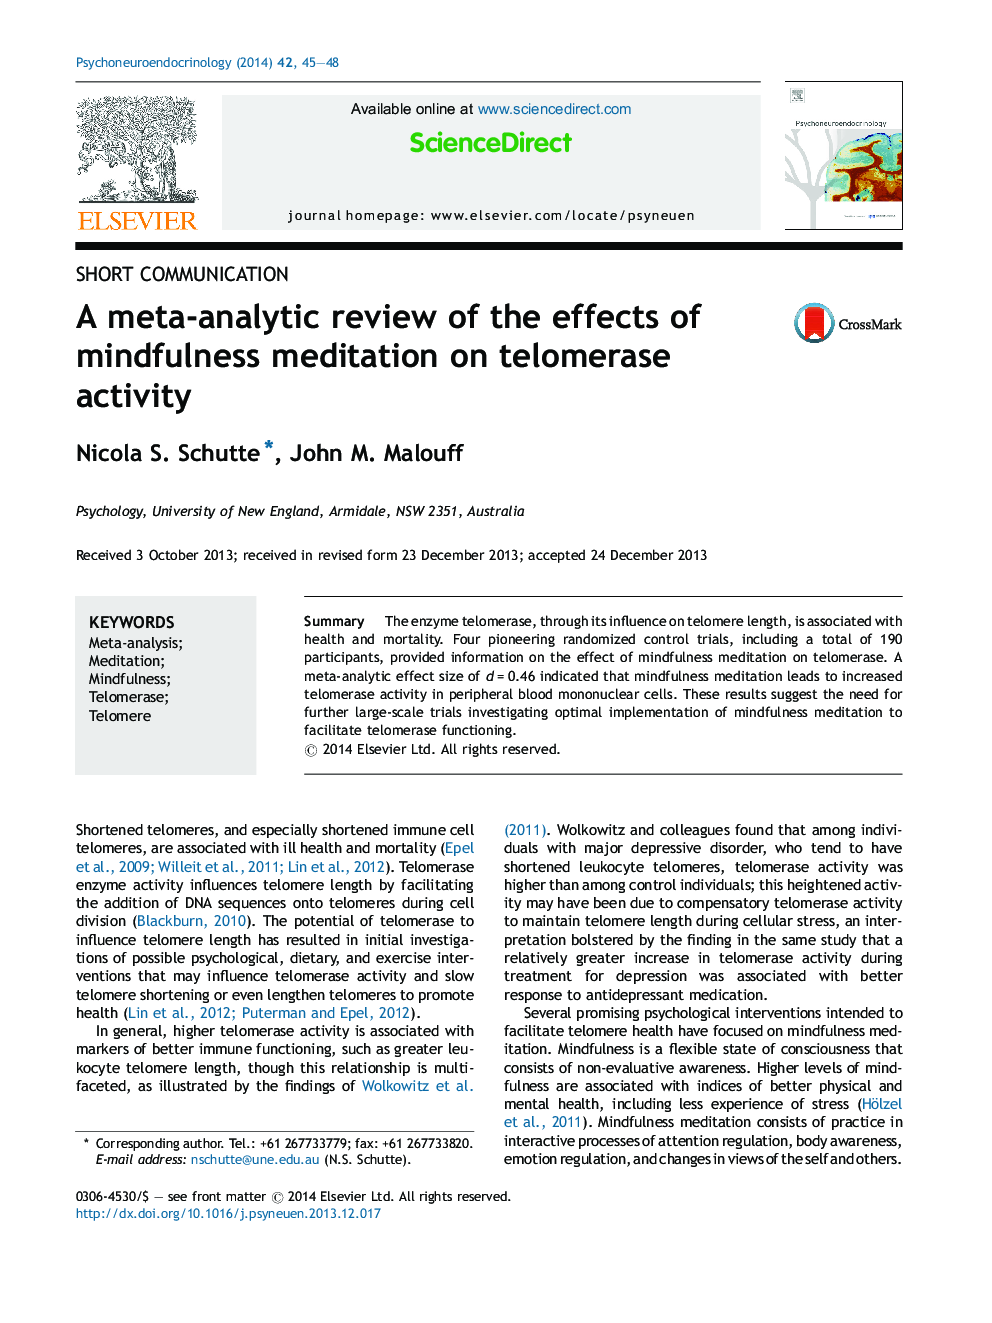 بررسی متاآنالیز اثرات مدیتیشن ذهن بر فعالیت تلومراز 